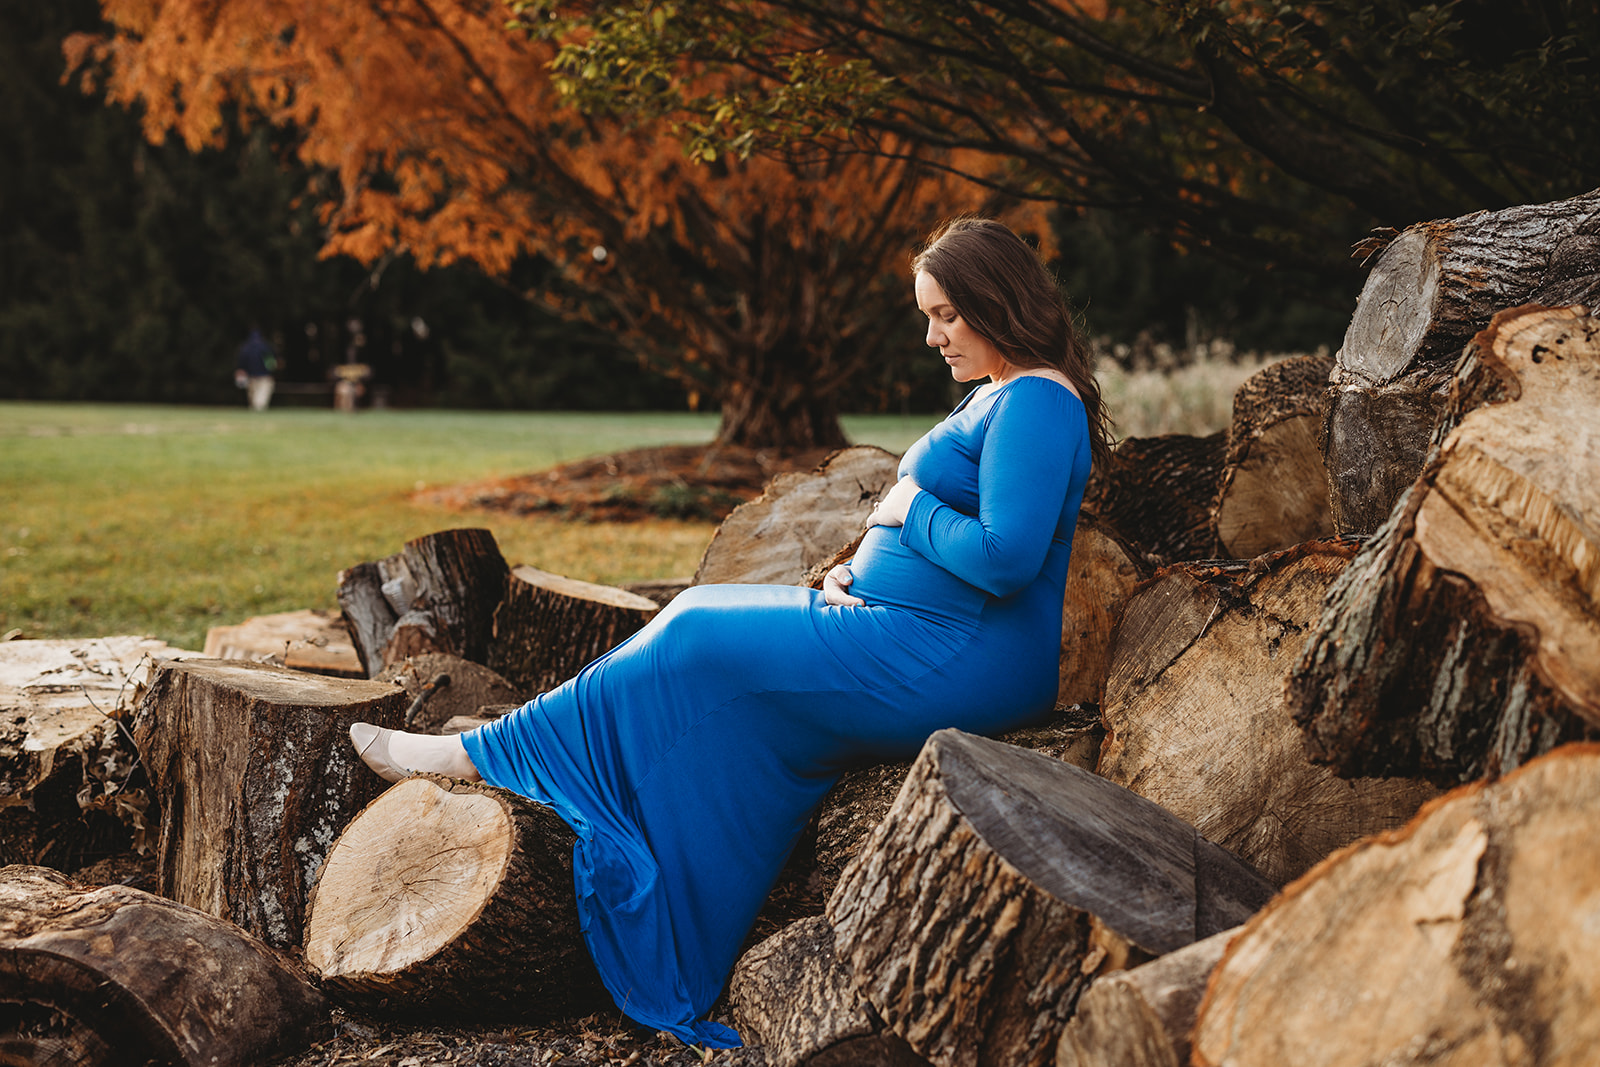 fall golden hour maternity portrait session photoshoot wyomissing park berks county pennsylvania